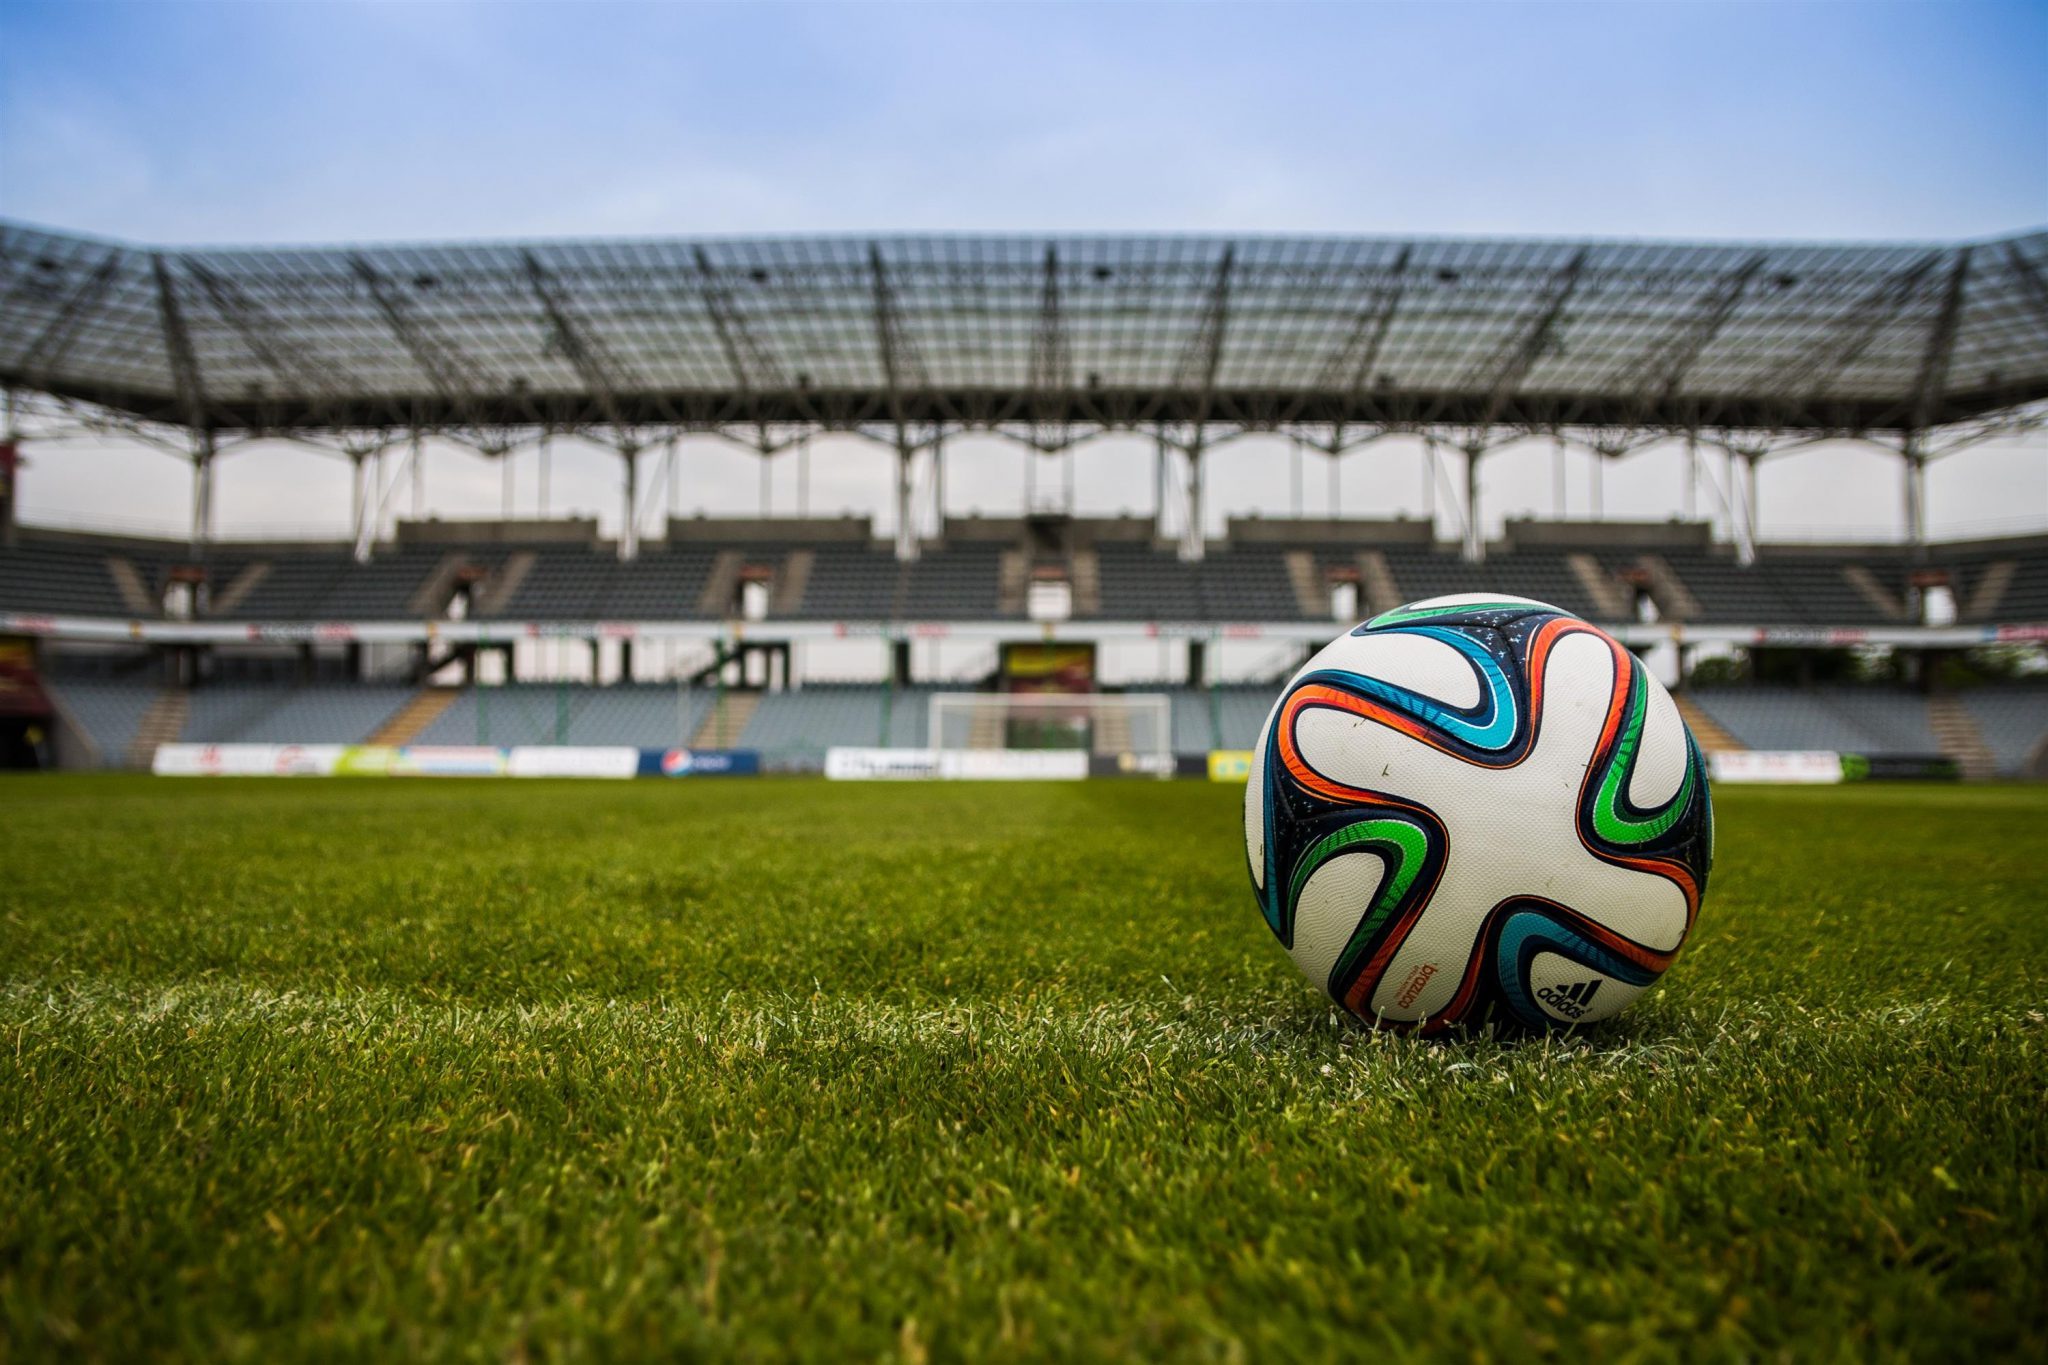 Fußball-Weltmeisterschaft 2018 | MKG Nürnberg, Dr. Dr. Zikarsky & Kollegen